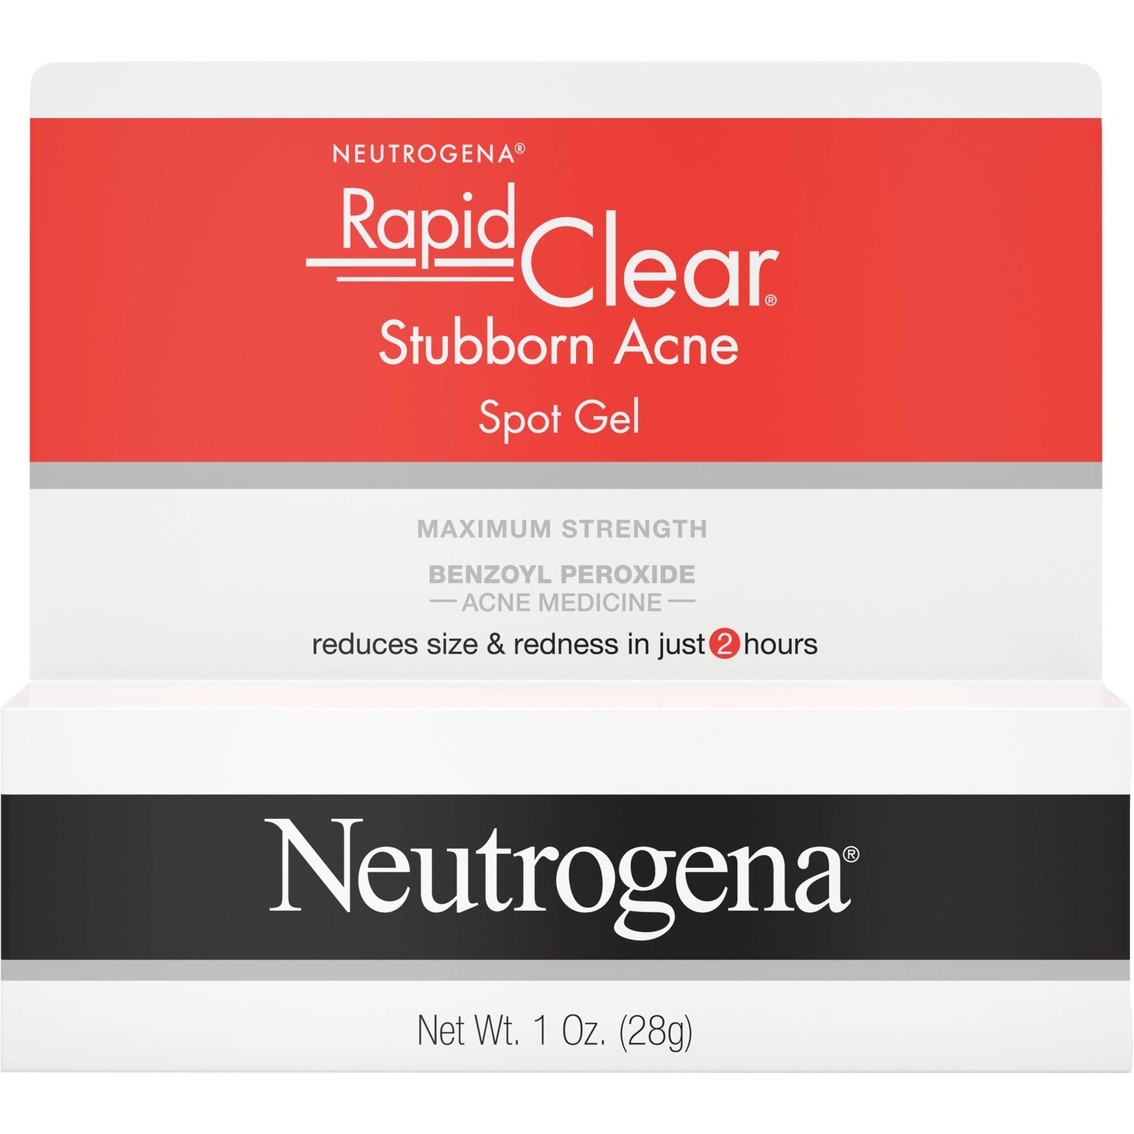 Neutrogena Rapid Clear Stubborn Acne Spot Gel, 1 oz.